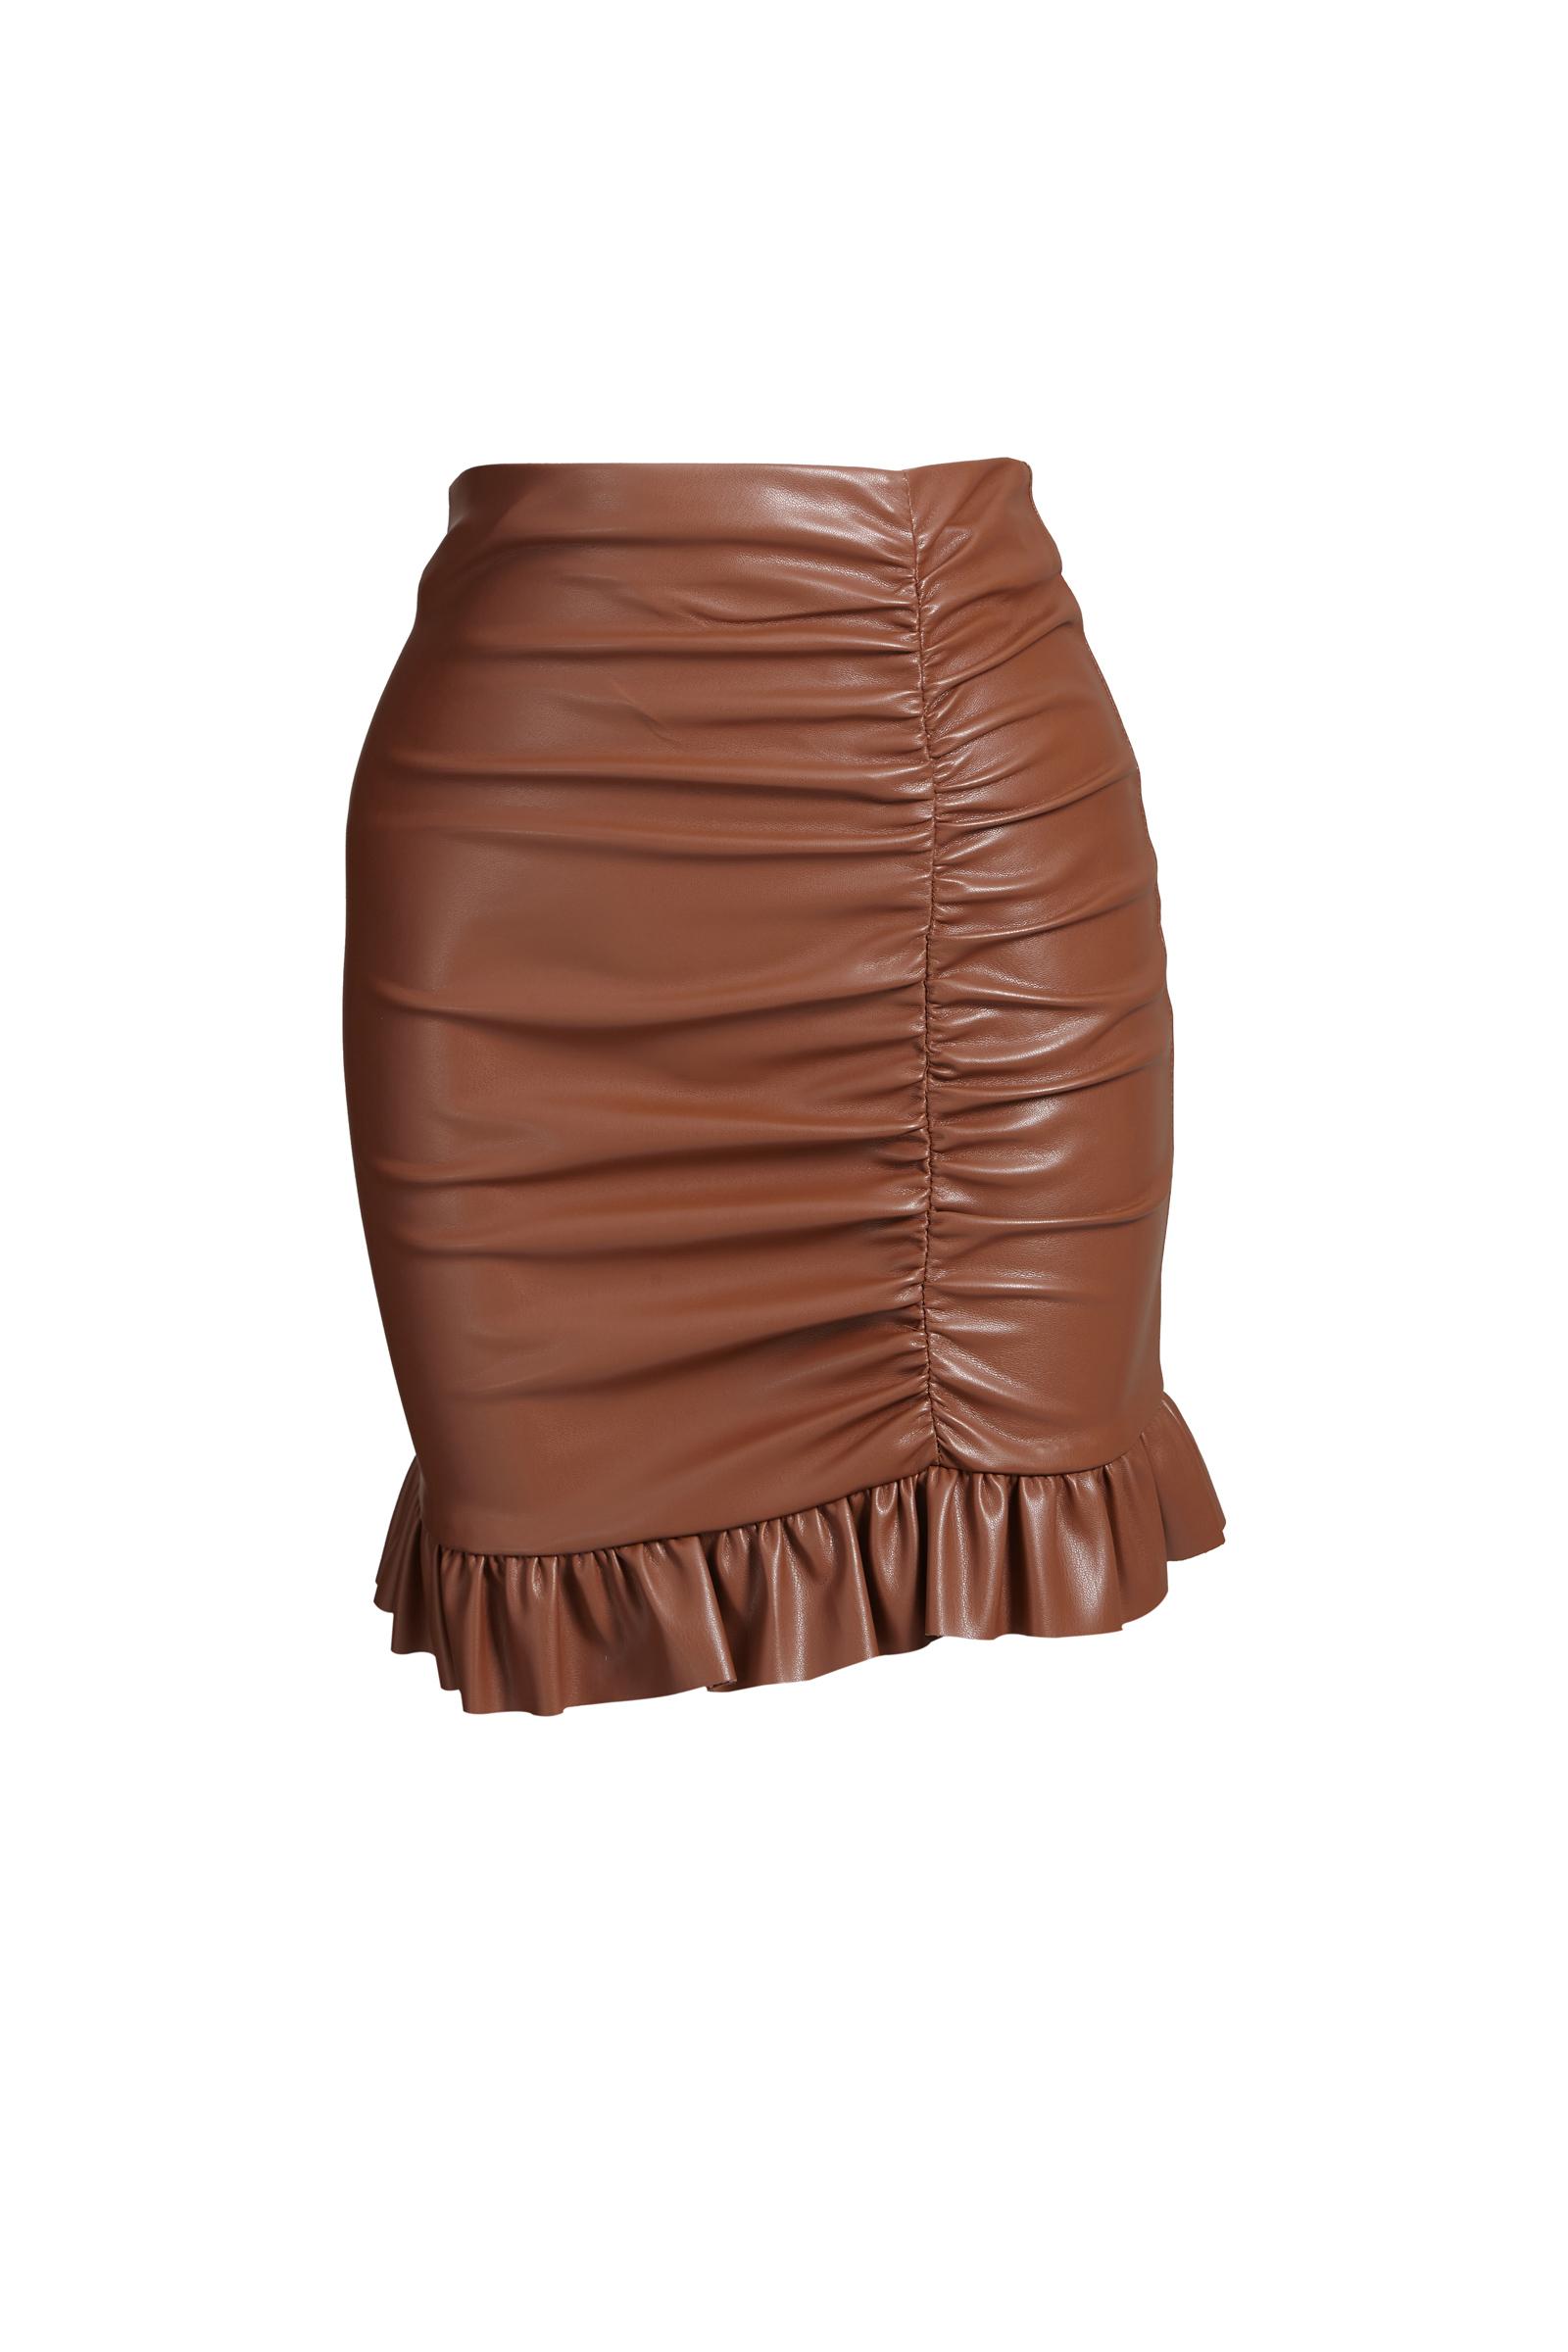 Brown Leather Mini Skirt